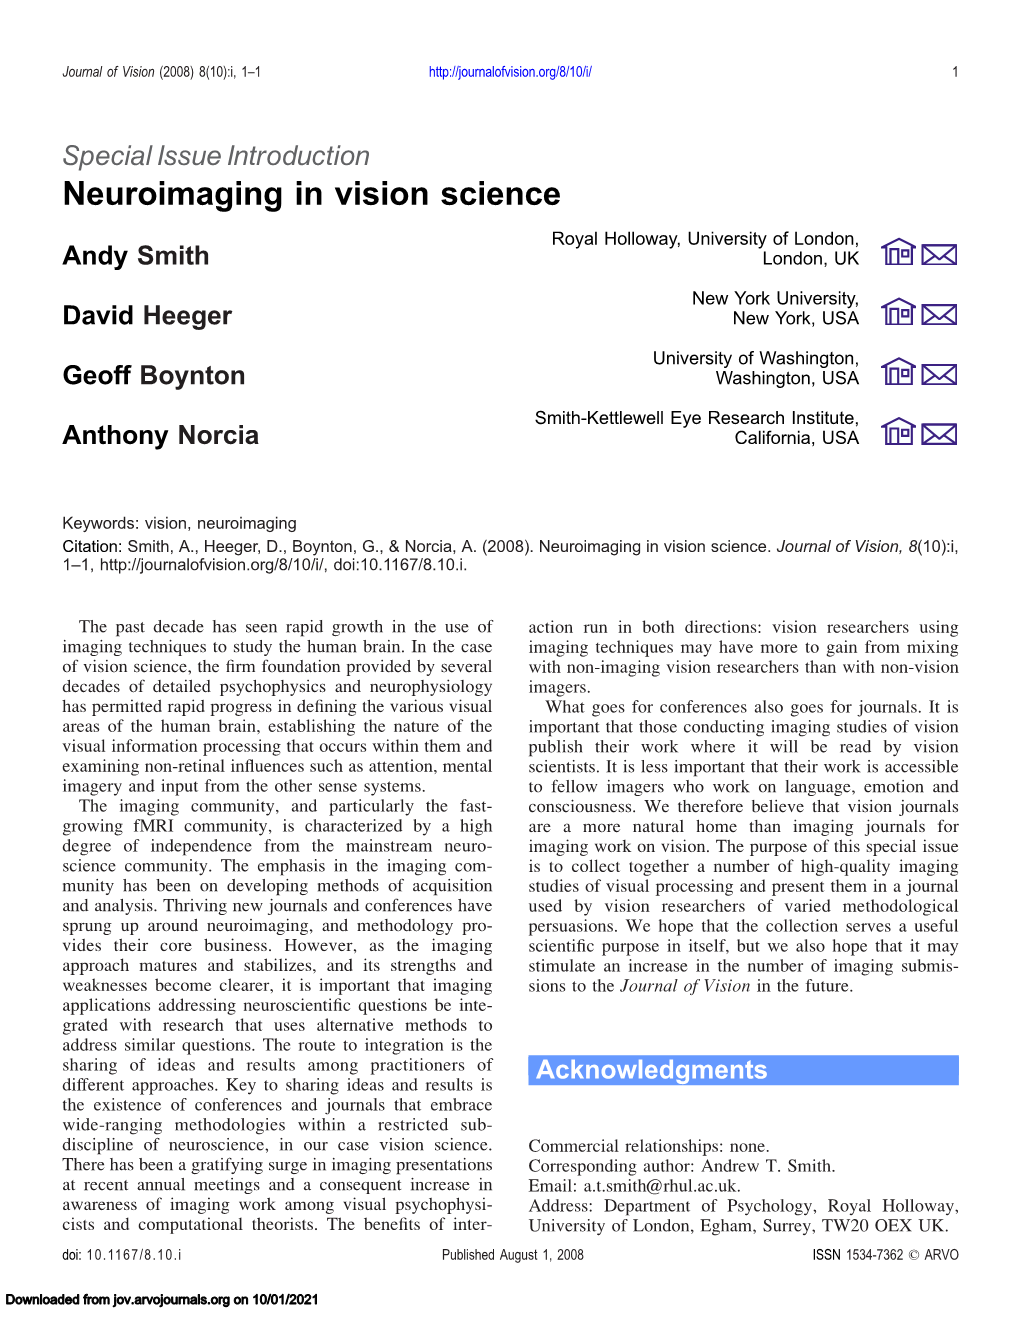 Neuroimaging in Vision Science